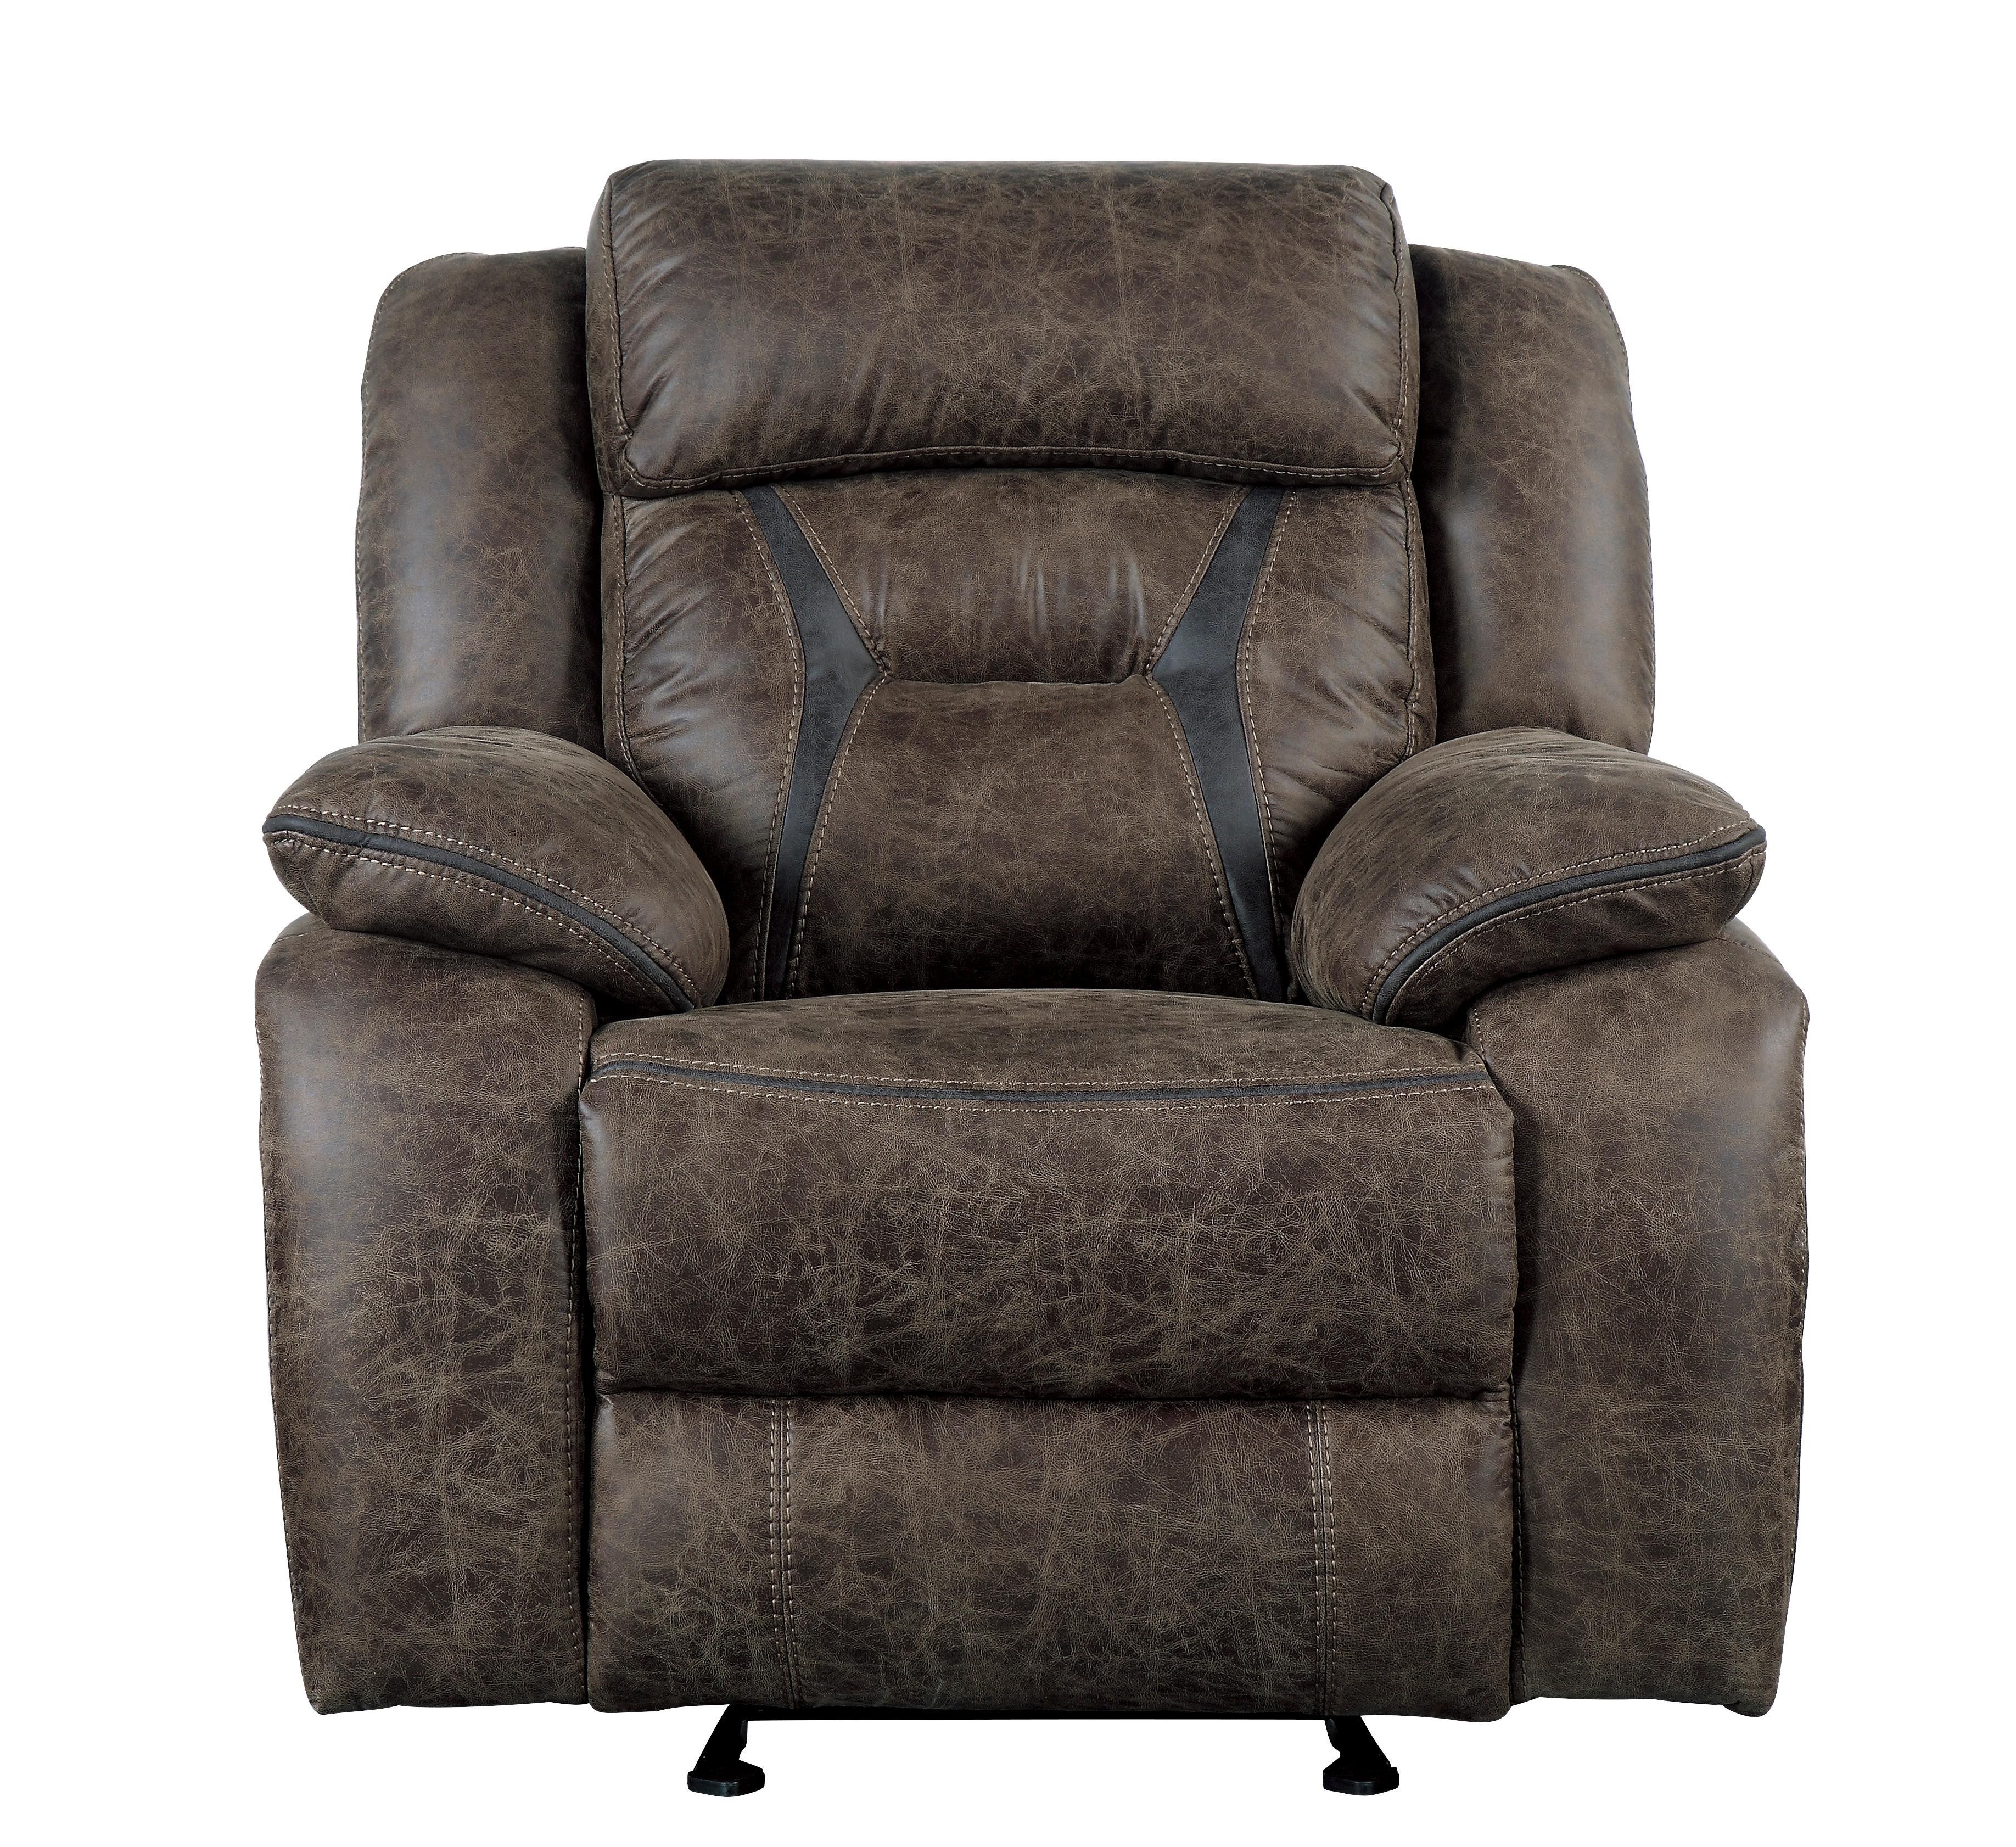 Modern Reclining Chair 9989DB-1 Madrona Hill 9989DB-1 in Dark Brown Microfiber